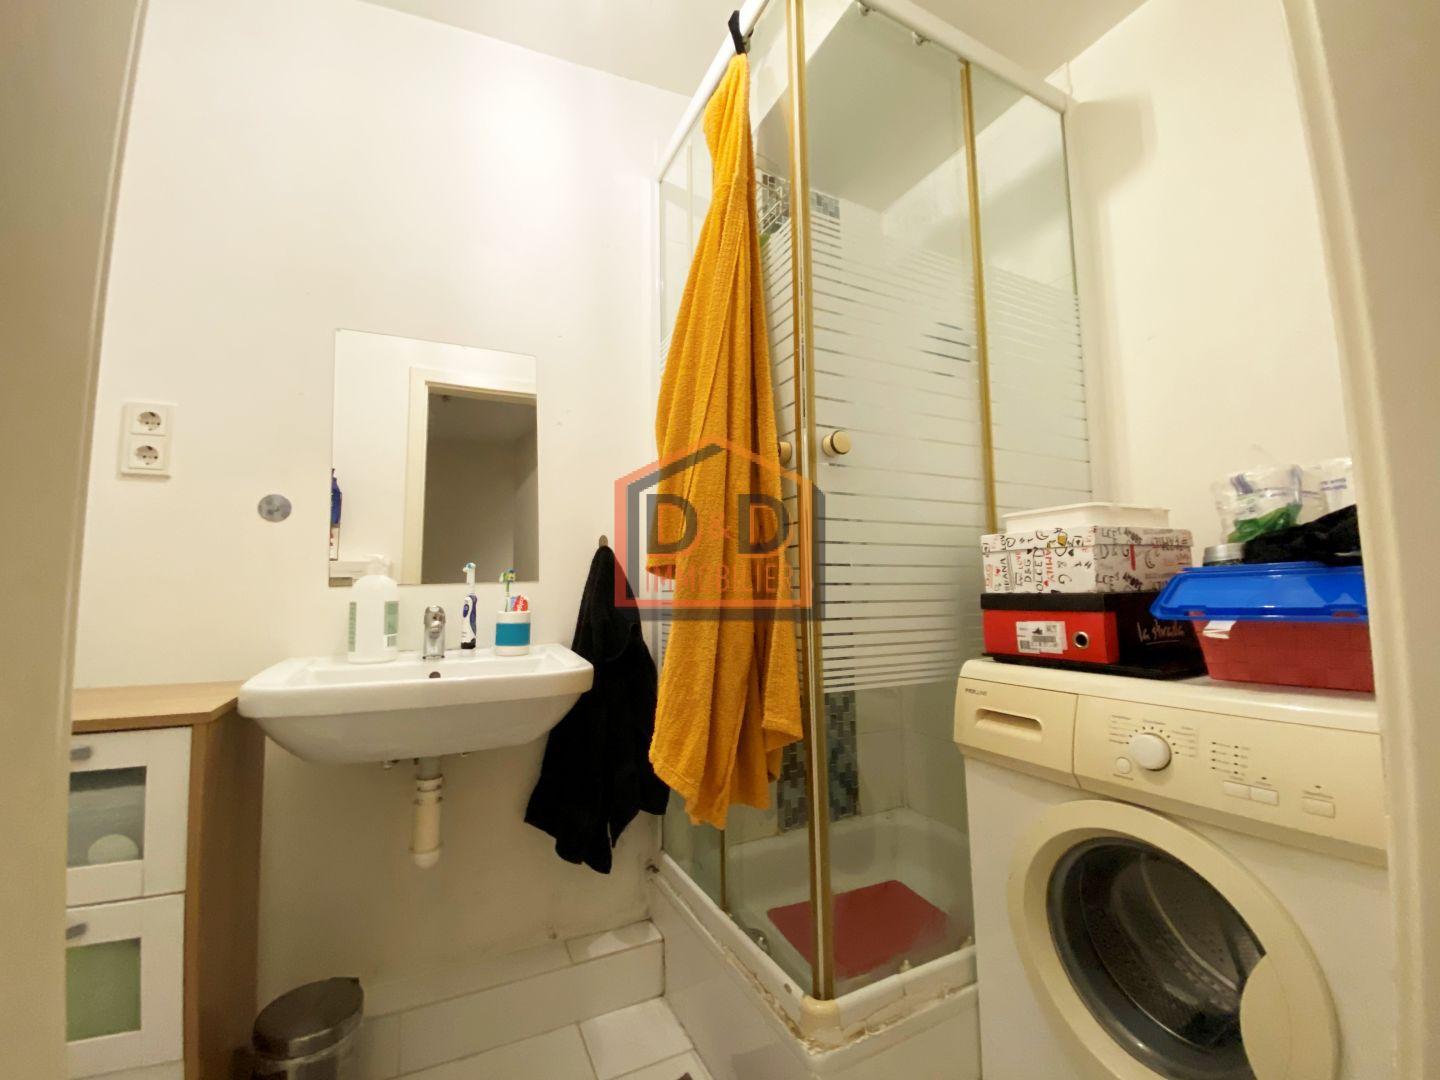 Appartement à Sandweiler, 45 m², 1 chambre, 1 salle de bain, 1 150 €/mois